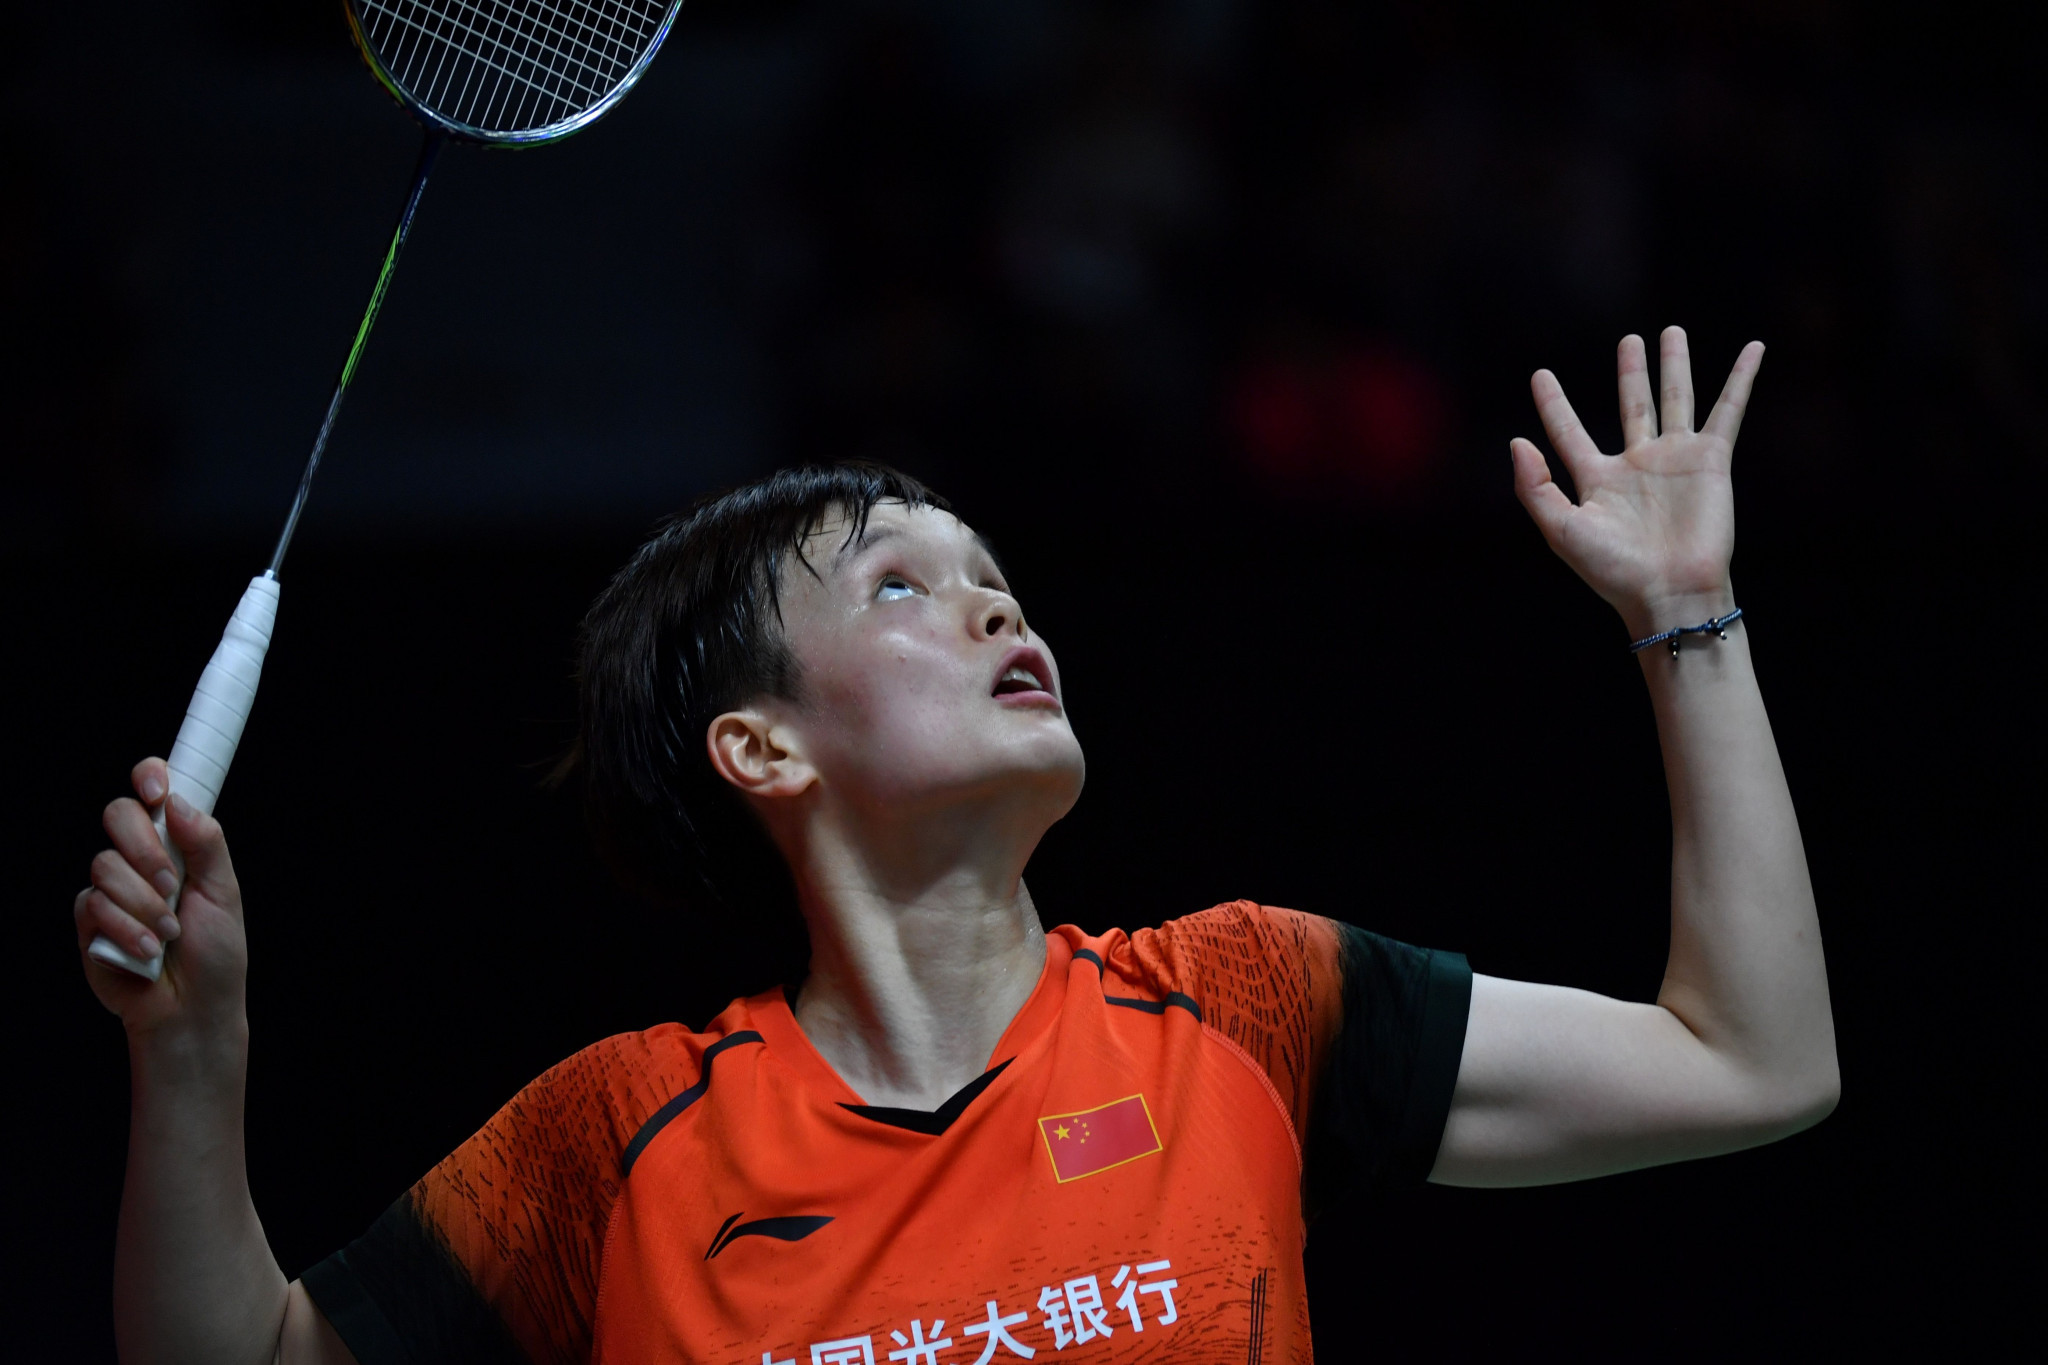 Wang Zhiyi won the women's US Open title last year ©Getty Images